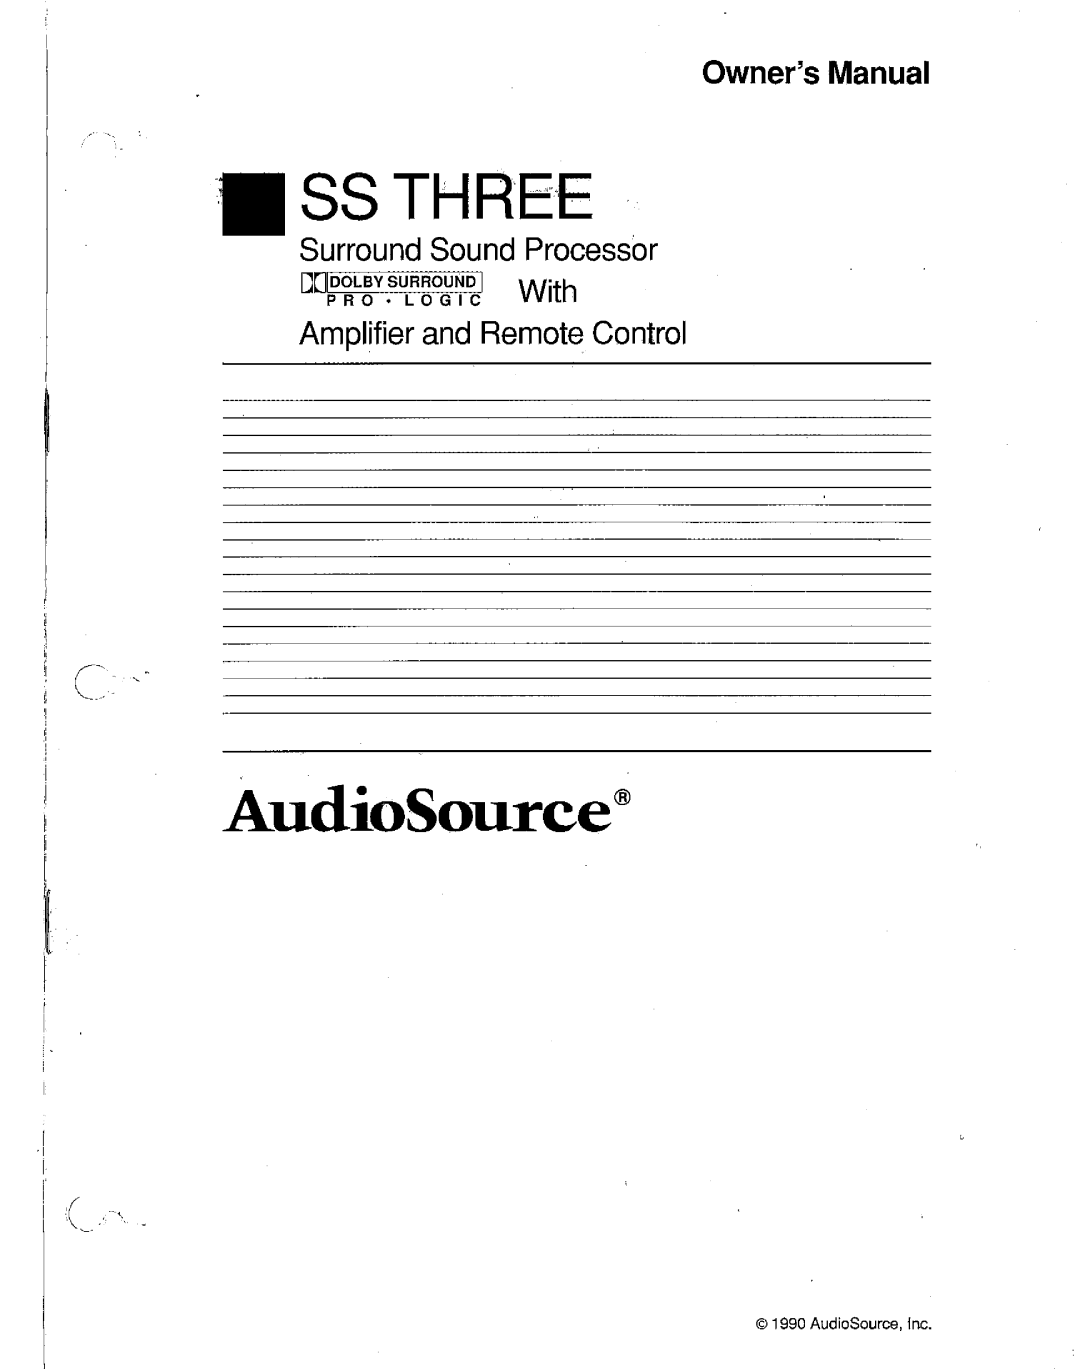 AudioSource SS THREE, Surround Sound Processor manual 